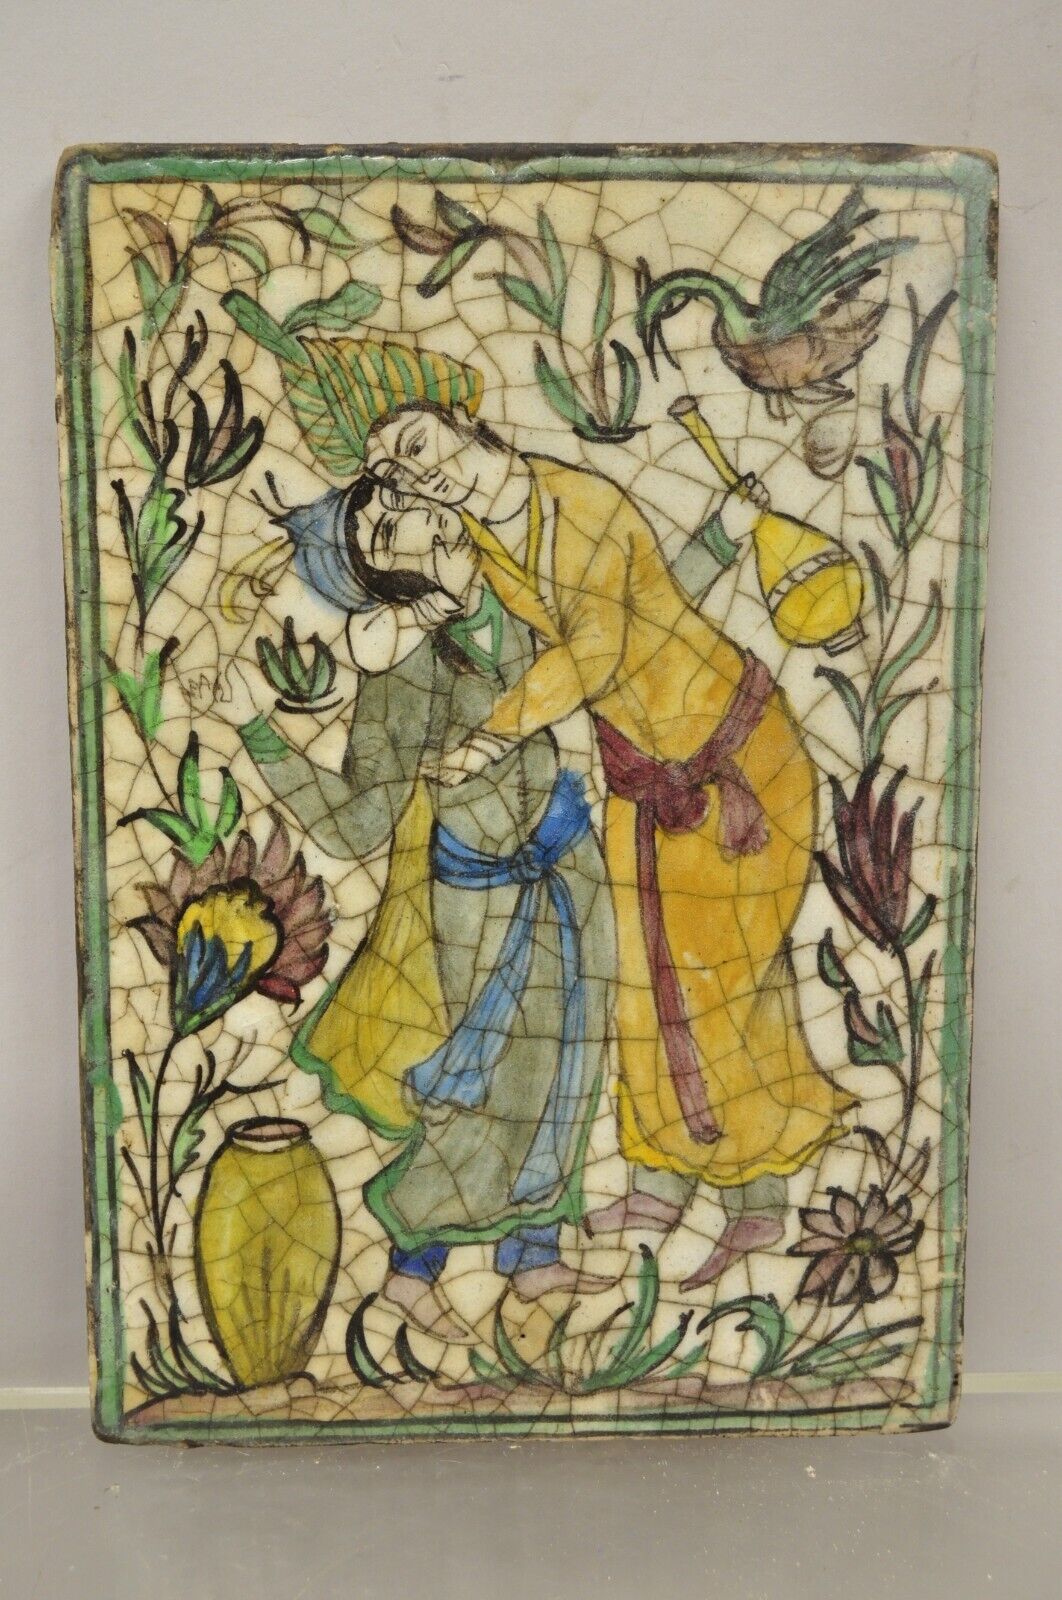 Antique Persian Iznik Qajar Style Ceramic Pottery Tile Green Man Lady Embrace C2